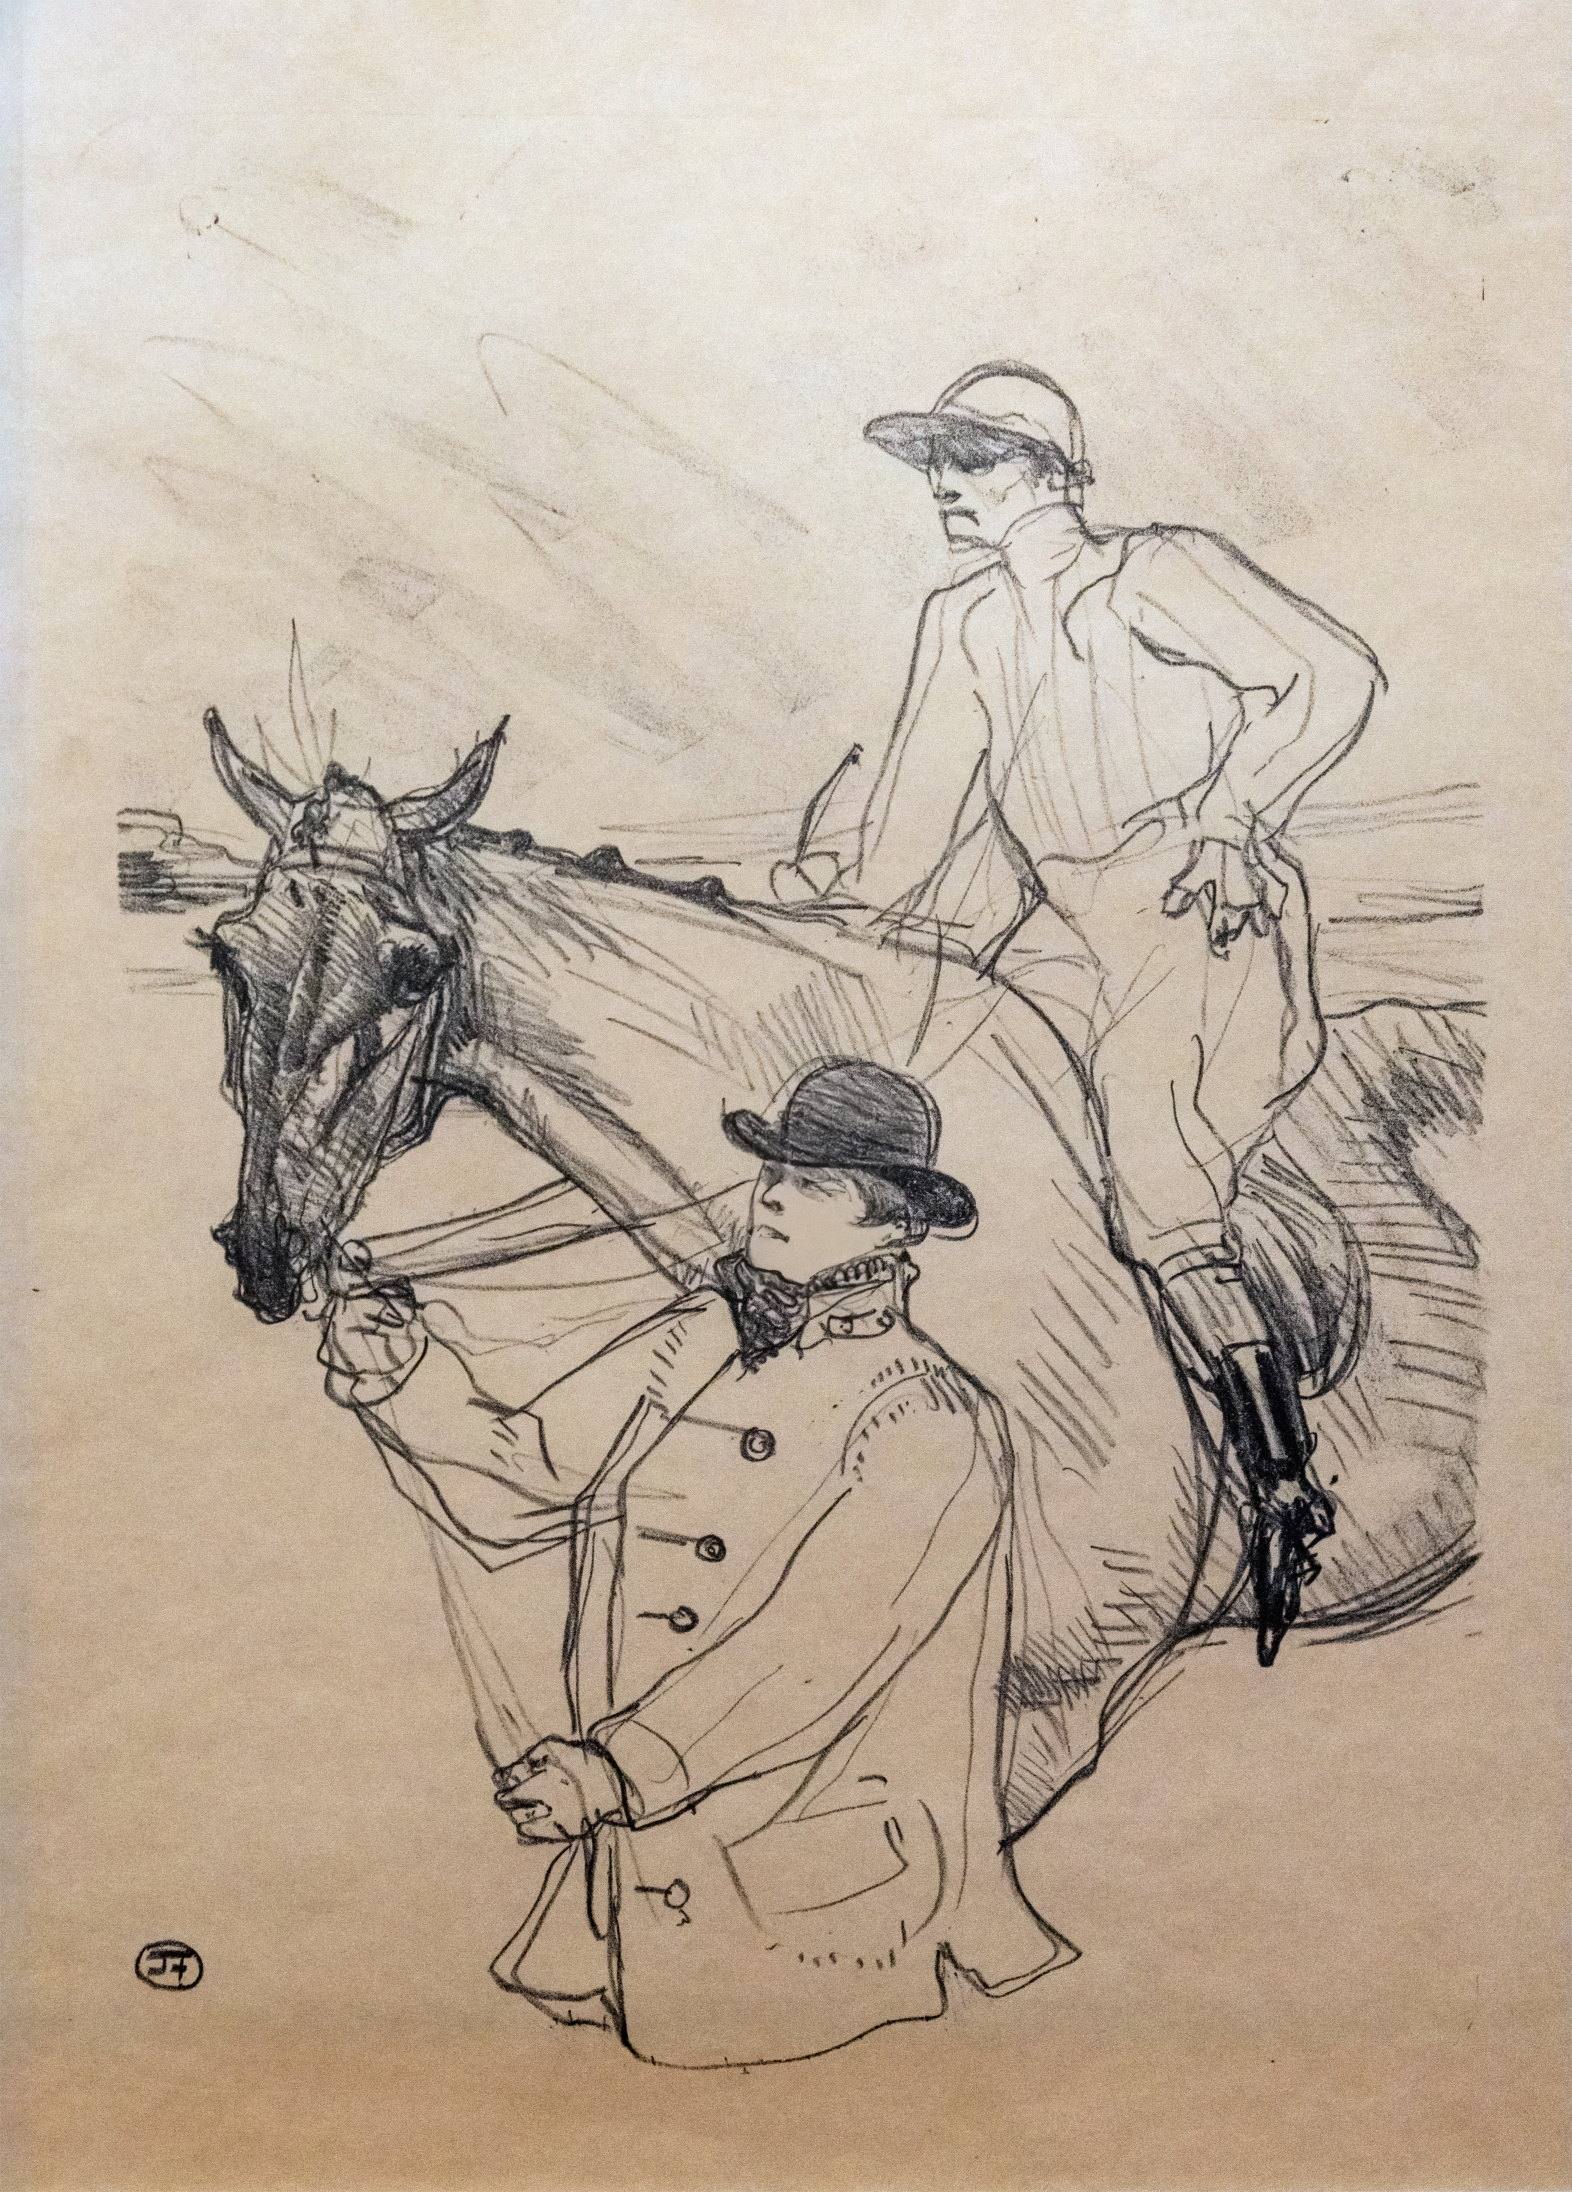 Henri Toulouse-Lautrec, Jockey going to the start, 1899. Source: wikimedia